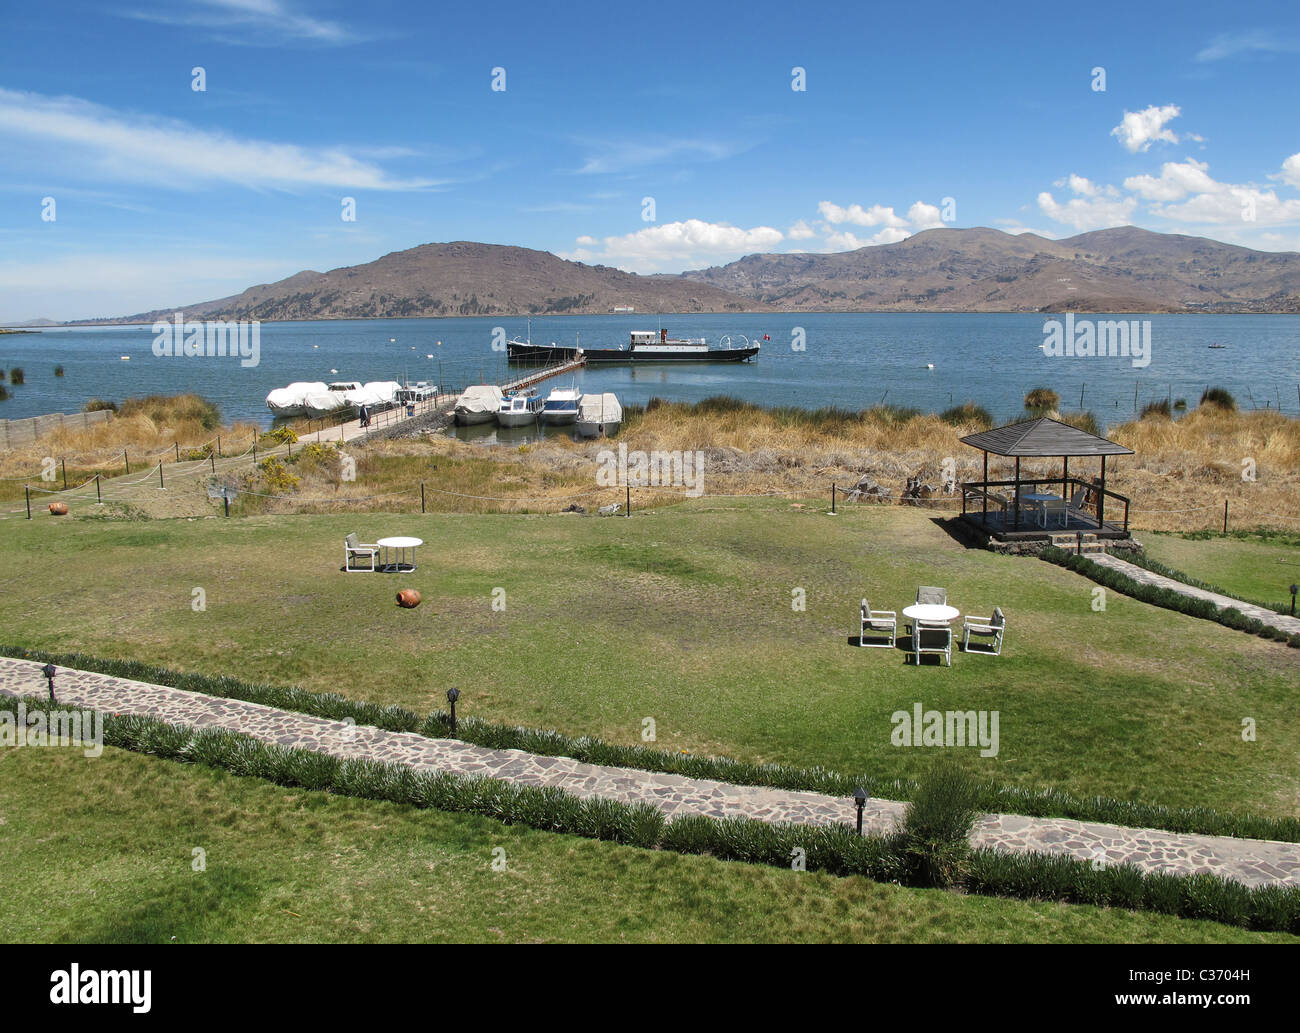 Old steam ship yavari , naval museum near hotel Posada del inca, lake Titicaca, Peru Stock Photo